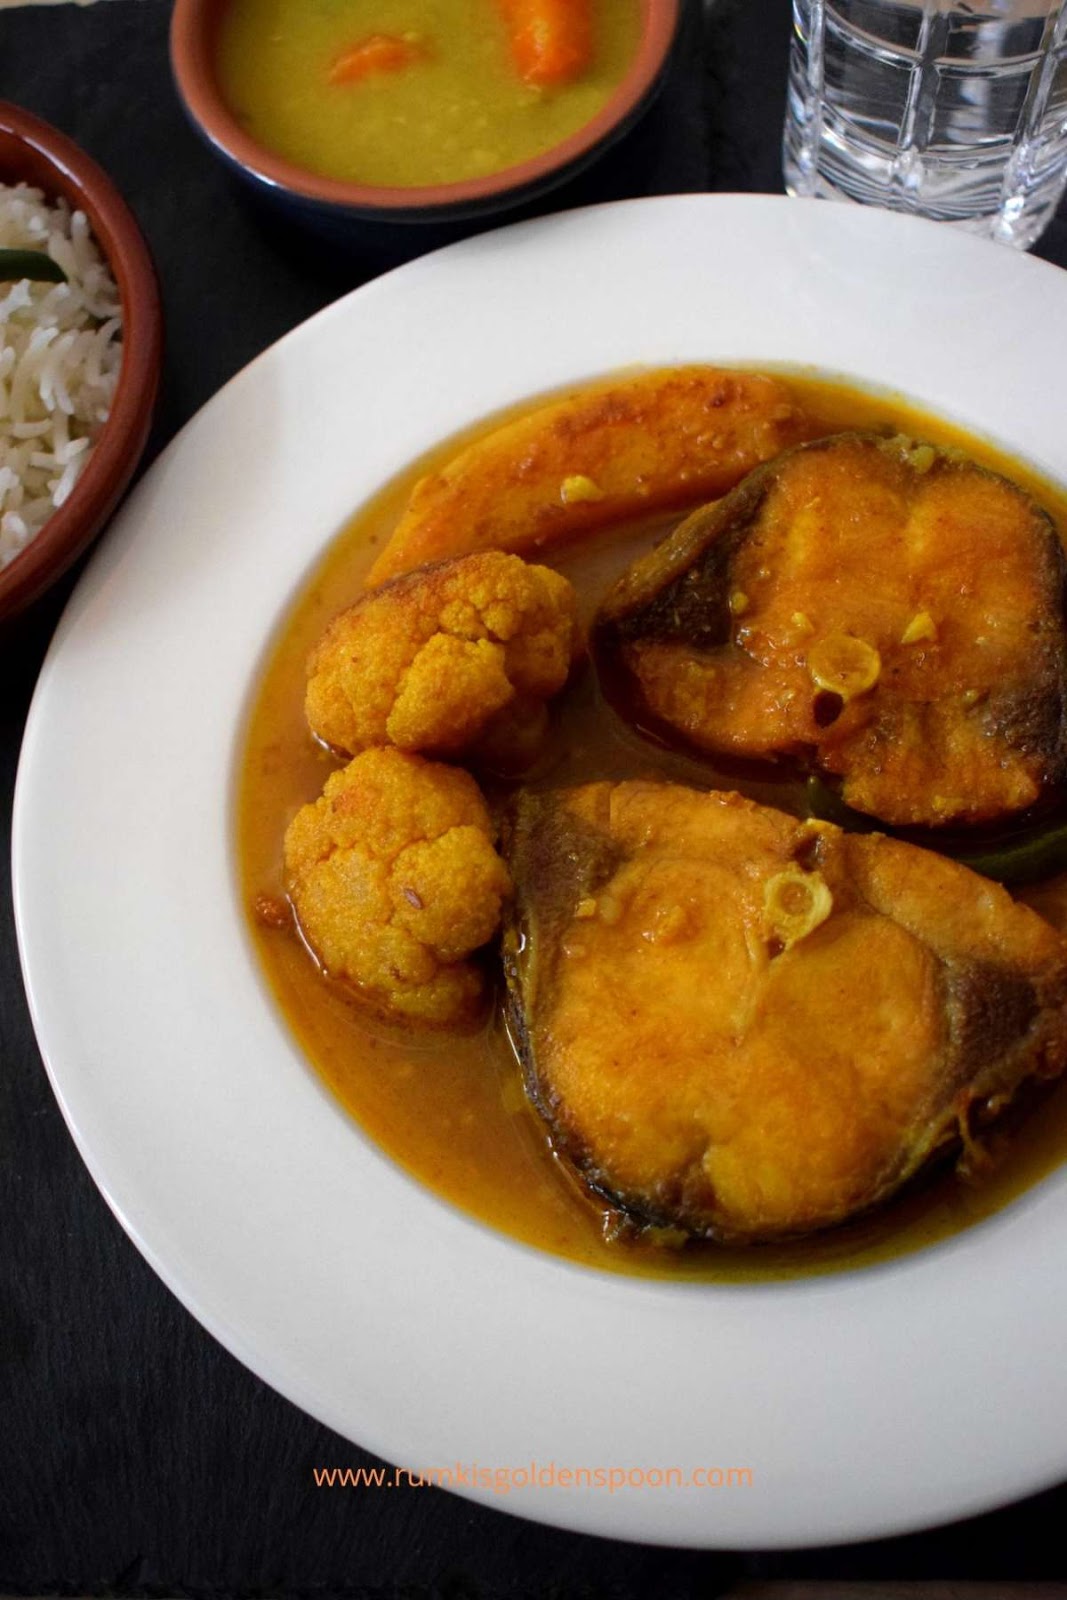 bengali fish curry, bengali fish curry recipe, recipe for bengali fish curry, rohu fish curry, recipe for rohu fish curry, how to make rohu fish curry, rui macher jhol, rui macher patla jhol, fulkopi diye macher jhol, fulkopi diye rui macher jhol, Rumki's Golden Spoon